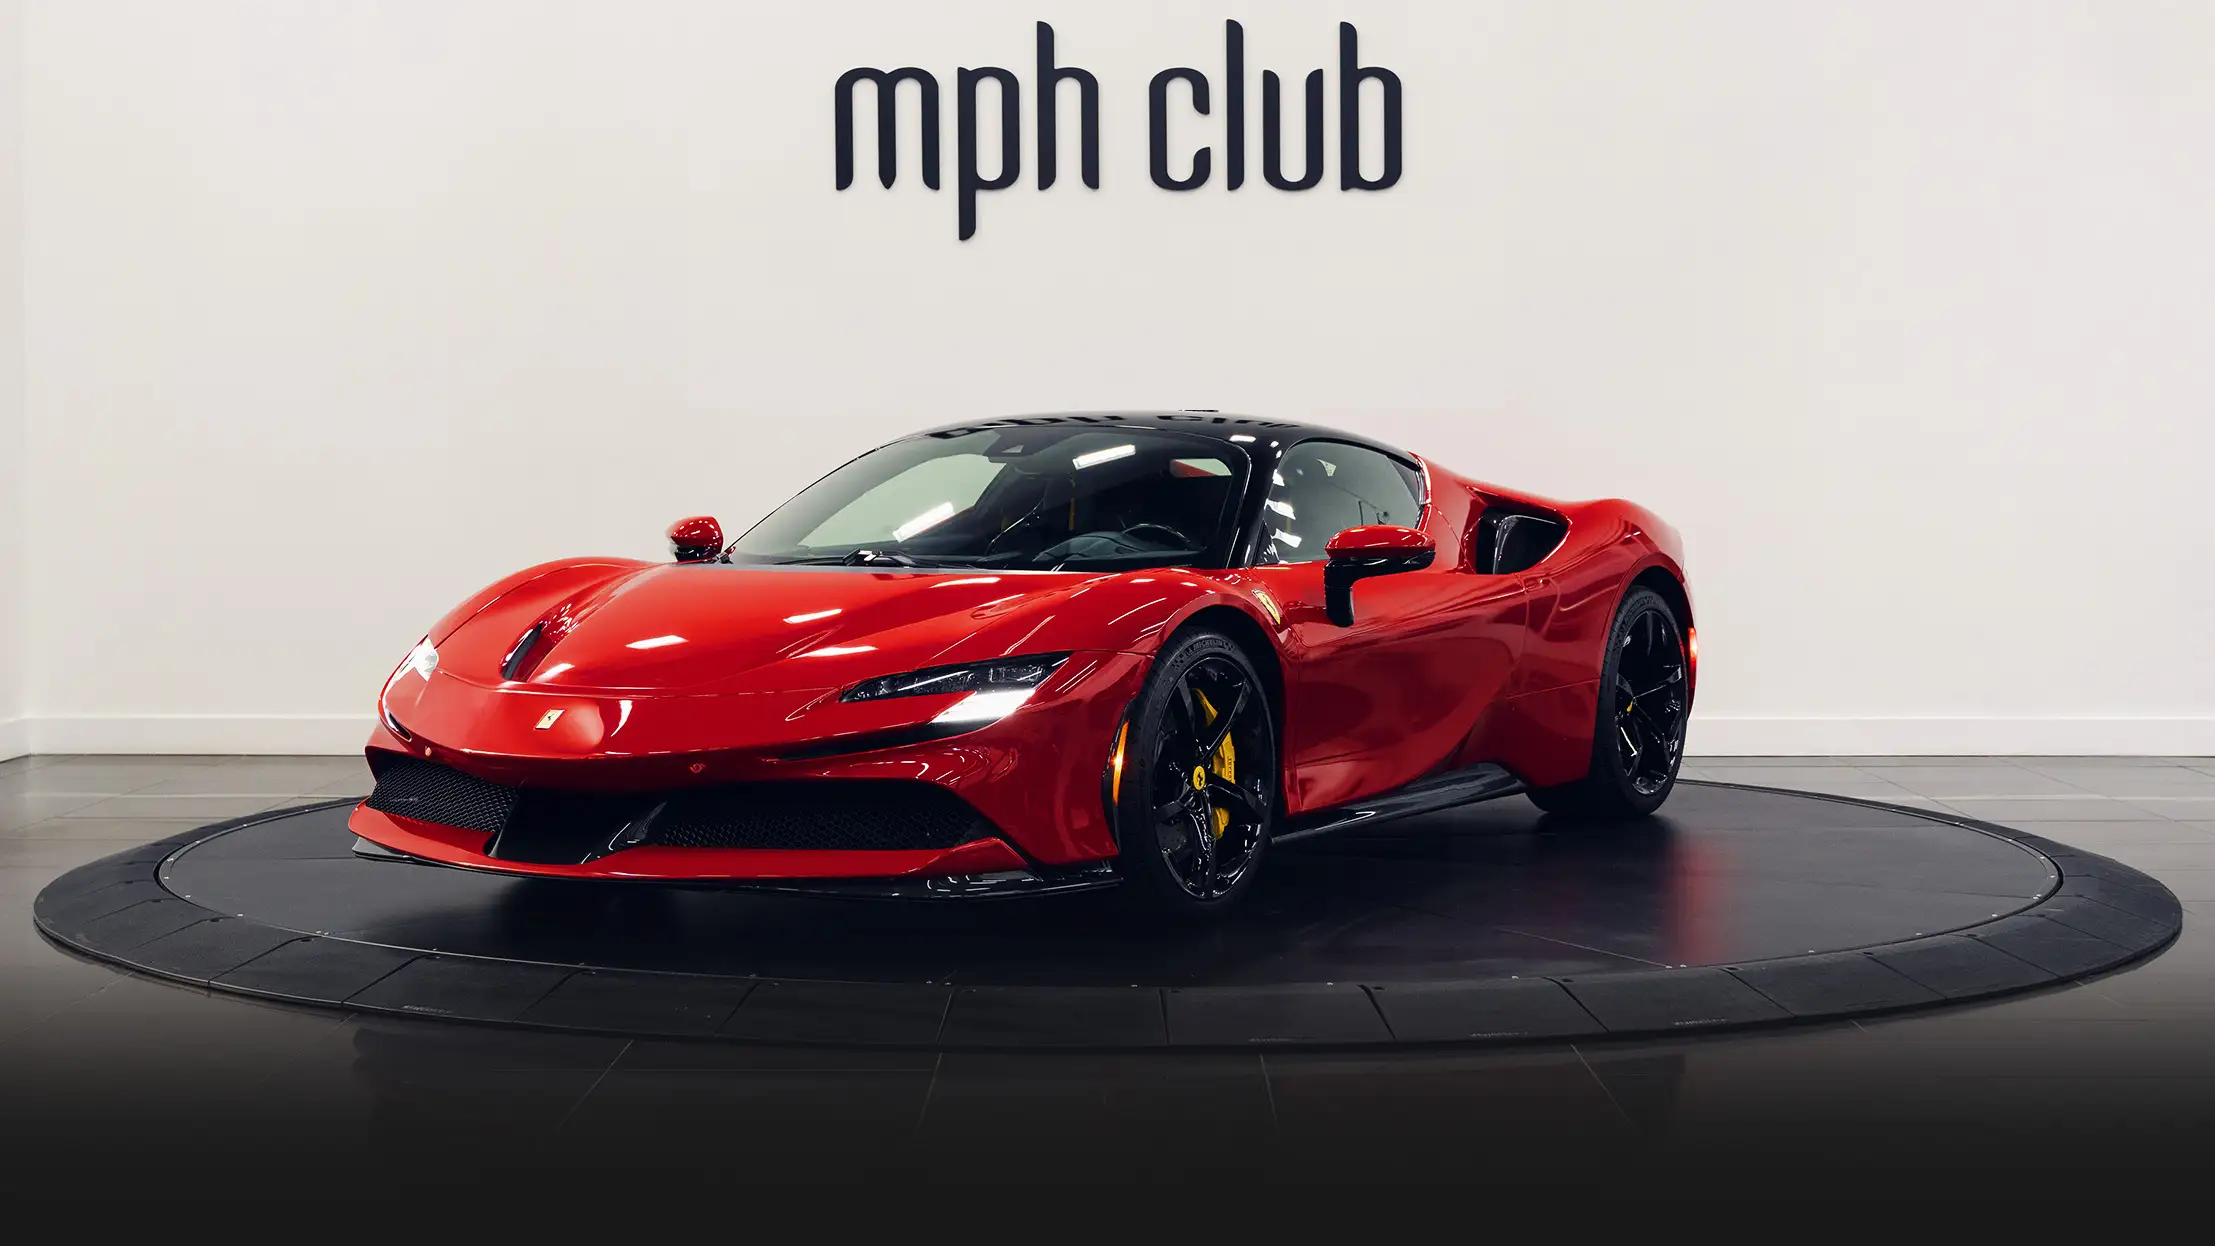 Ferrari SF90 Stradale rental profile view mph club